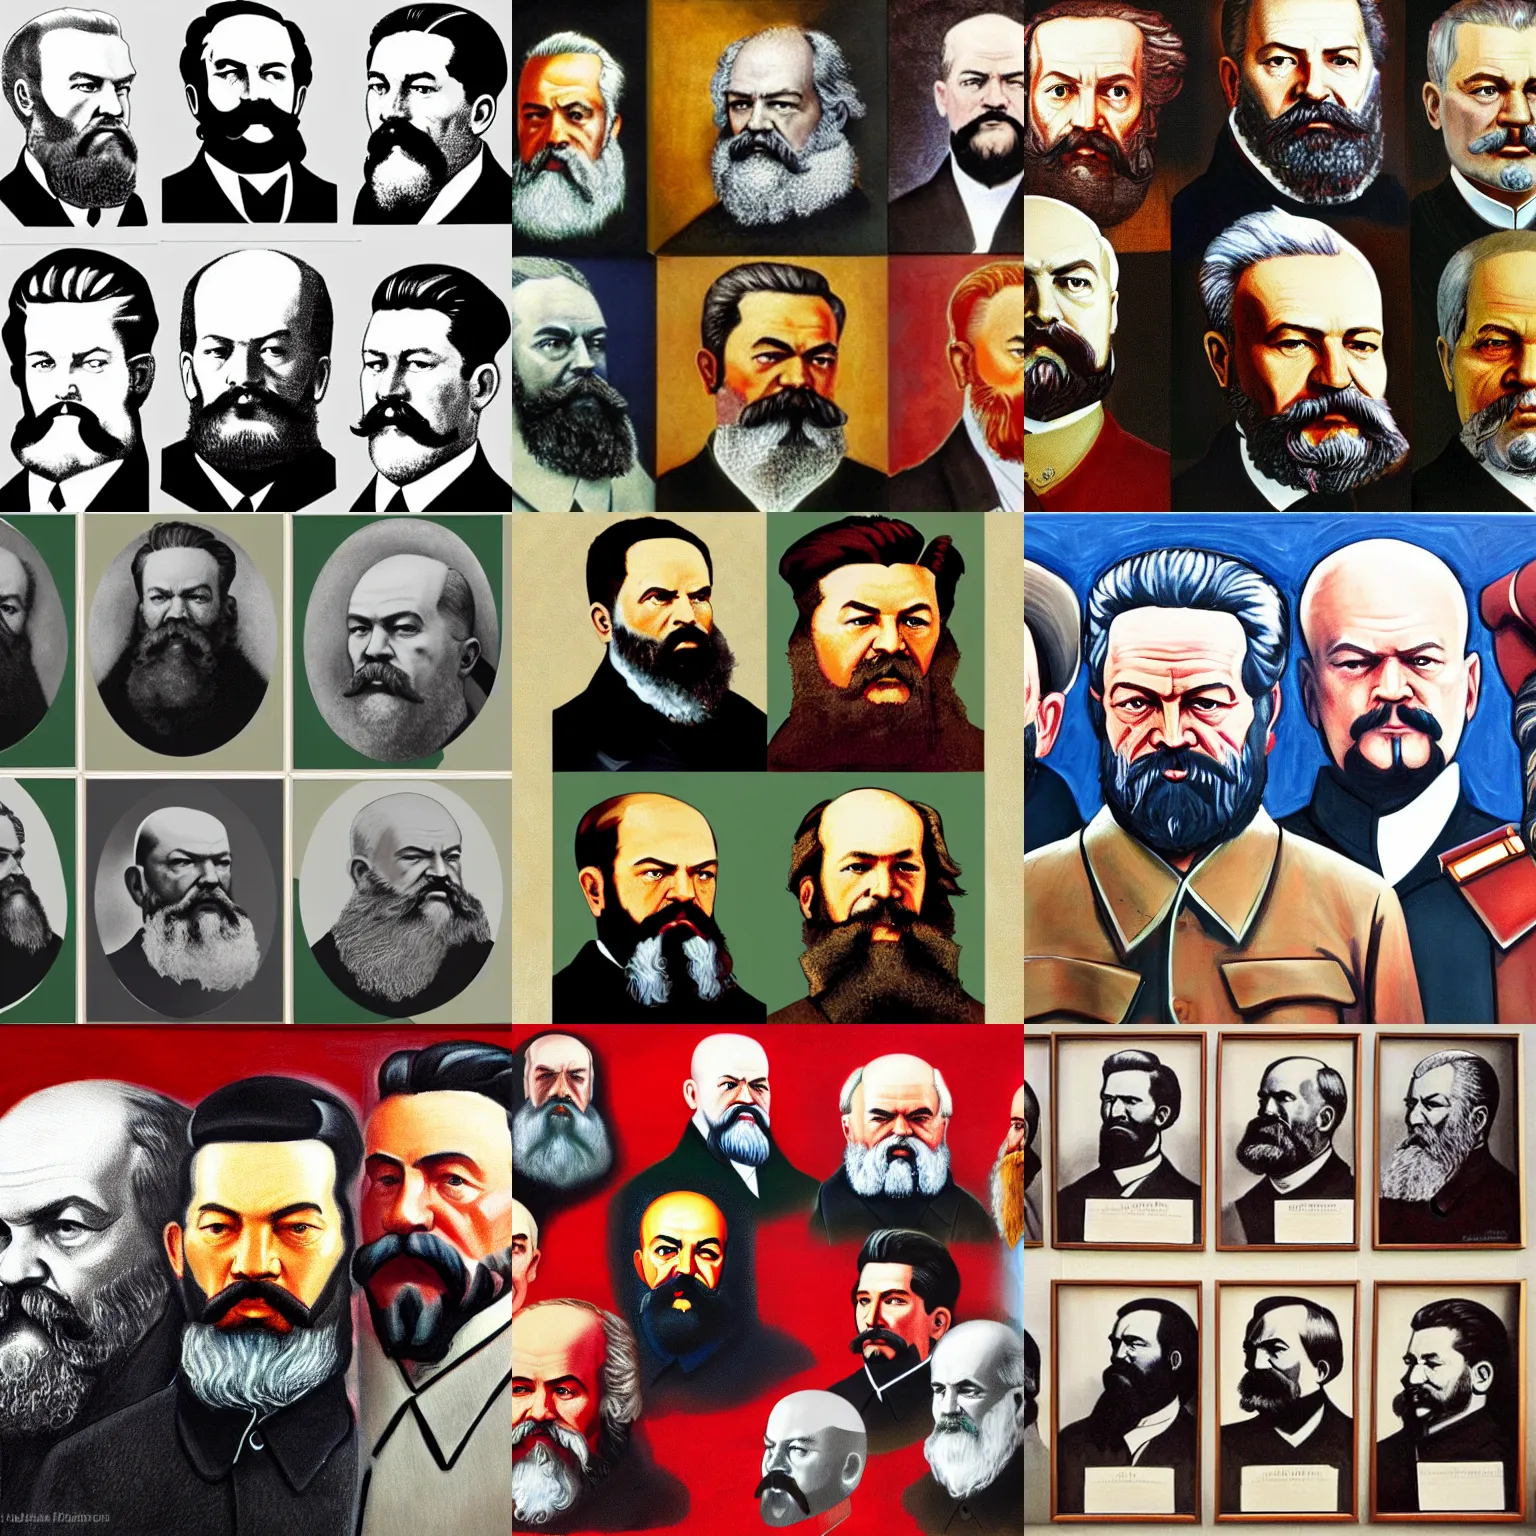 Prompt: a portrait style painting of Karl marx, John brown, Vladimir Lenin, stalin, chairman Mao, and Dale Earnhardt jr